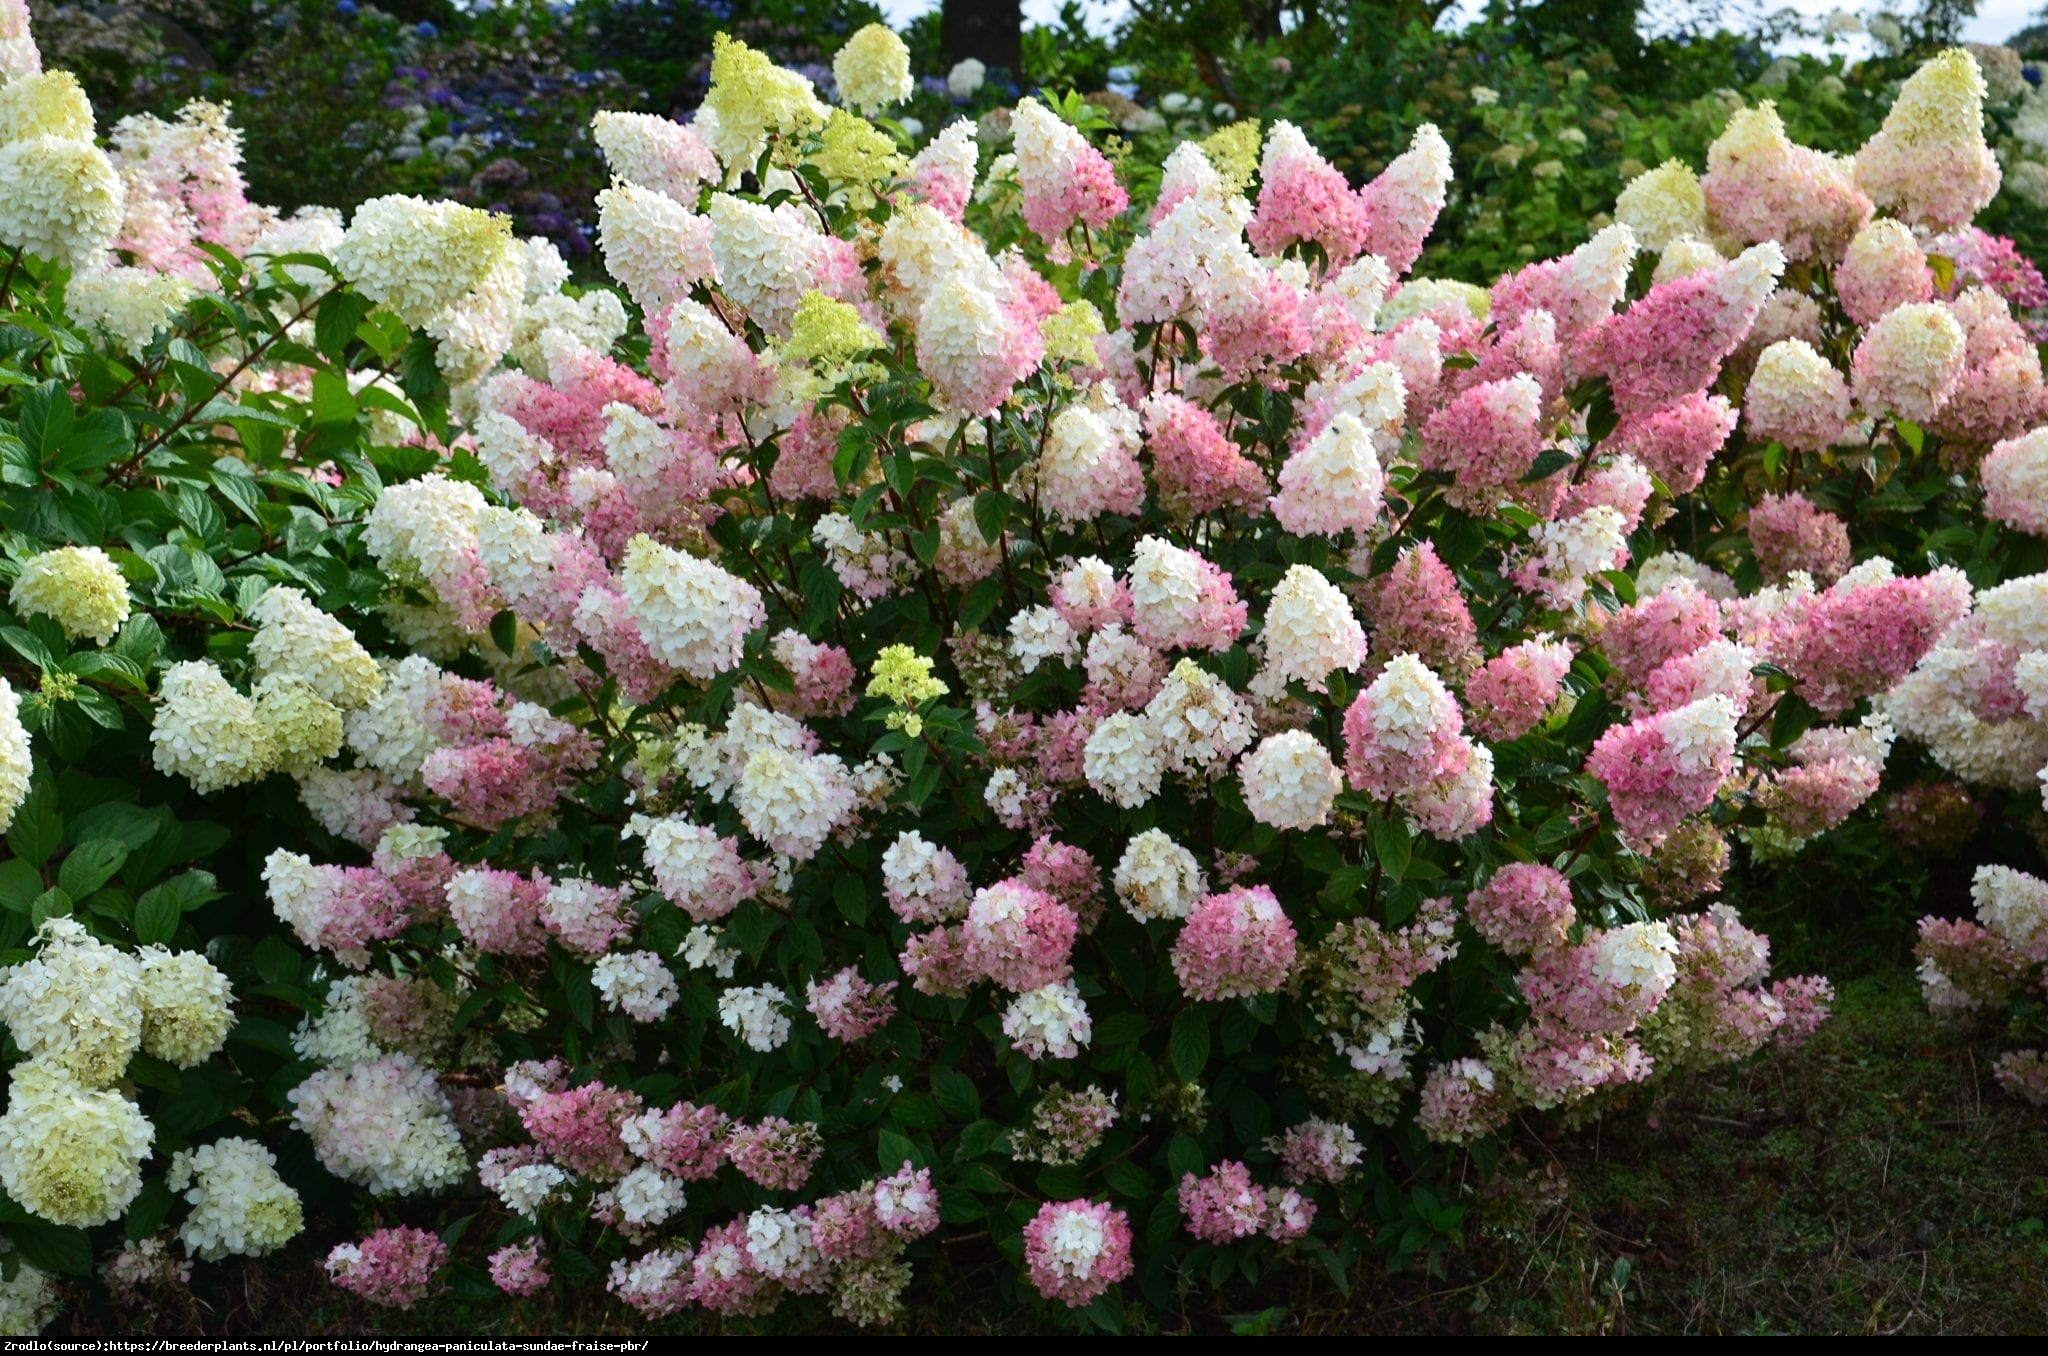 Hortensja bukietowa SUNDAE FRAISE- miniaturowa księżniczka - Hydrangea paniculata Sunday Fraise